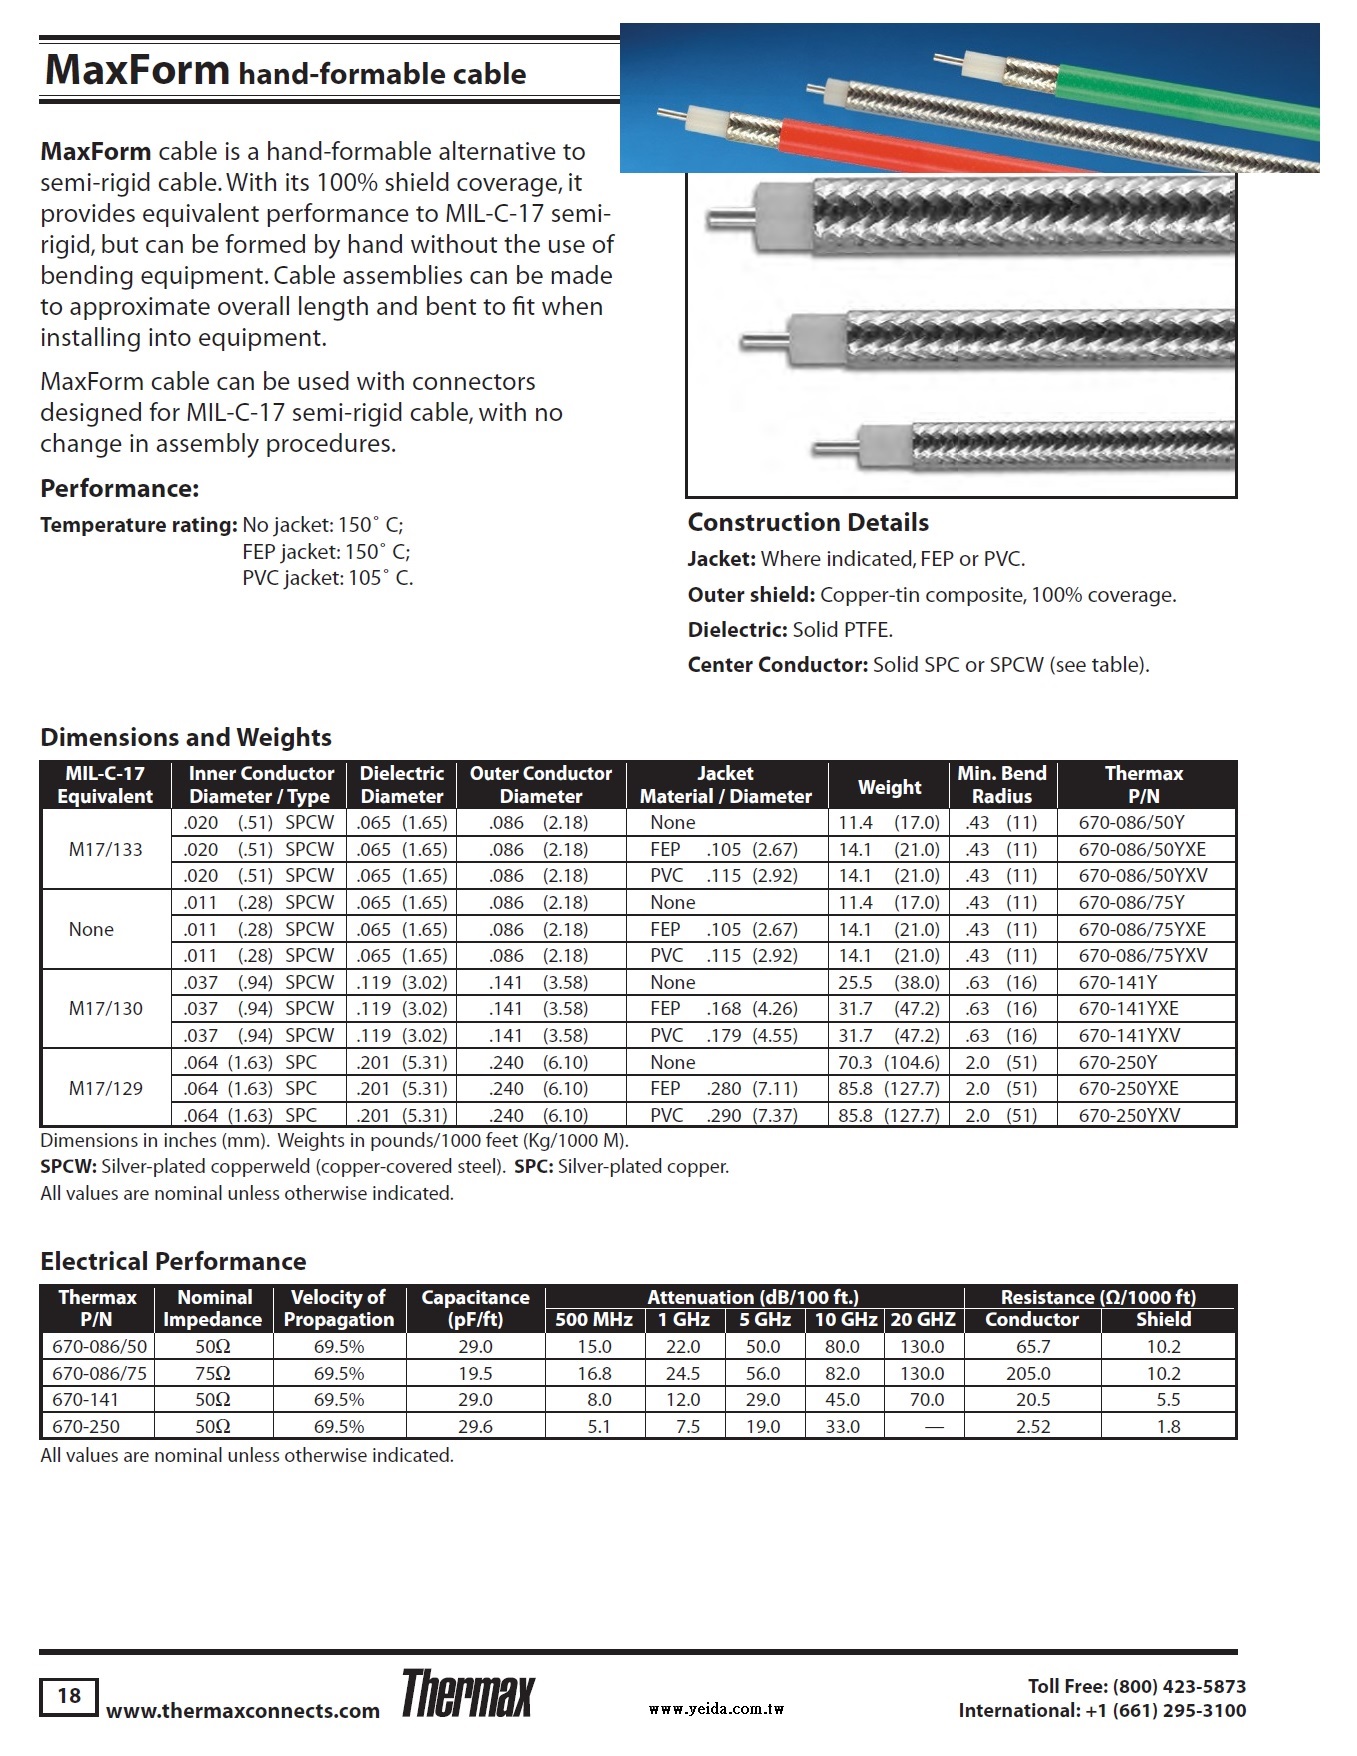 Carlisle-MaxForm® Formable  semi-rigid Coaxial Cable 50歐姆鍍銀鐵氟龍耐高低溫低損耗MaxForm®可成型同軸電纜產品圖